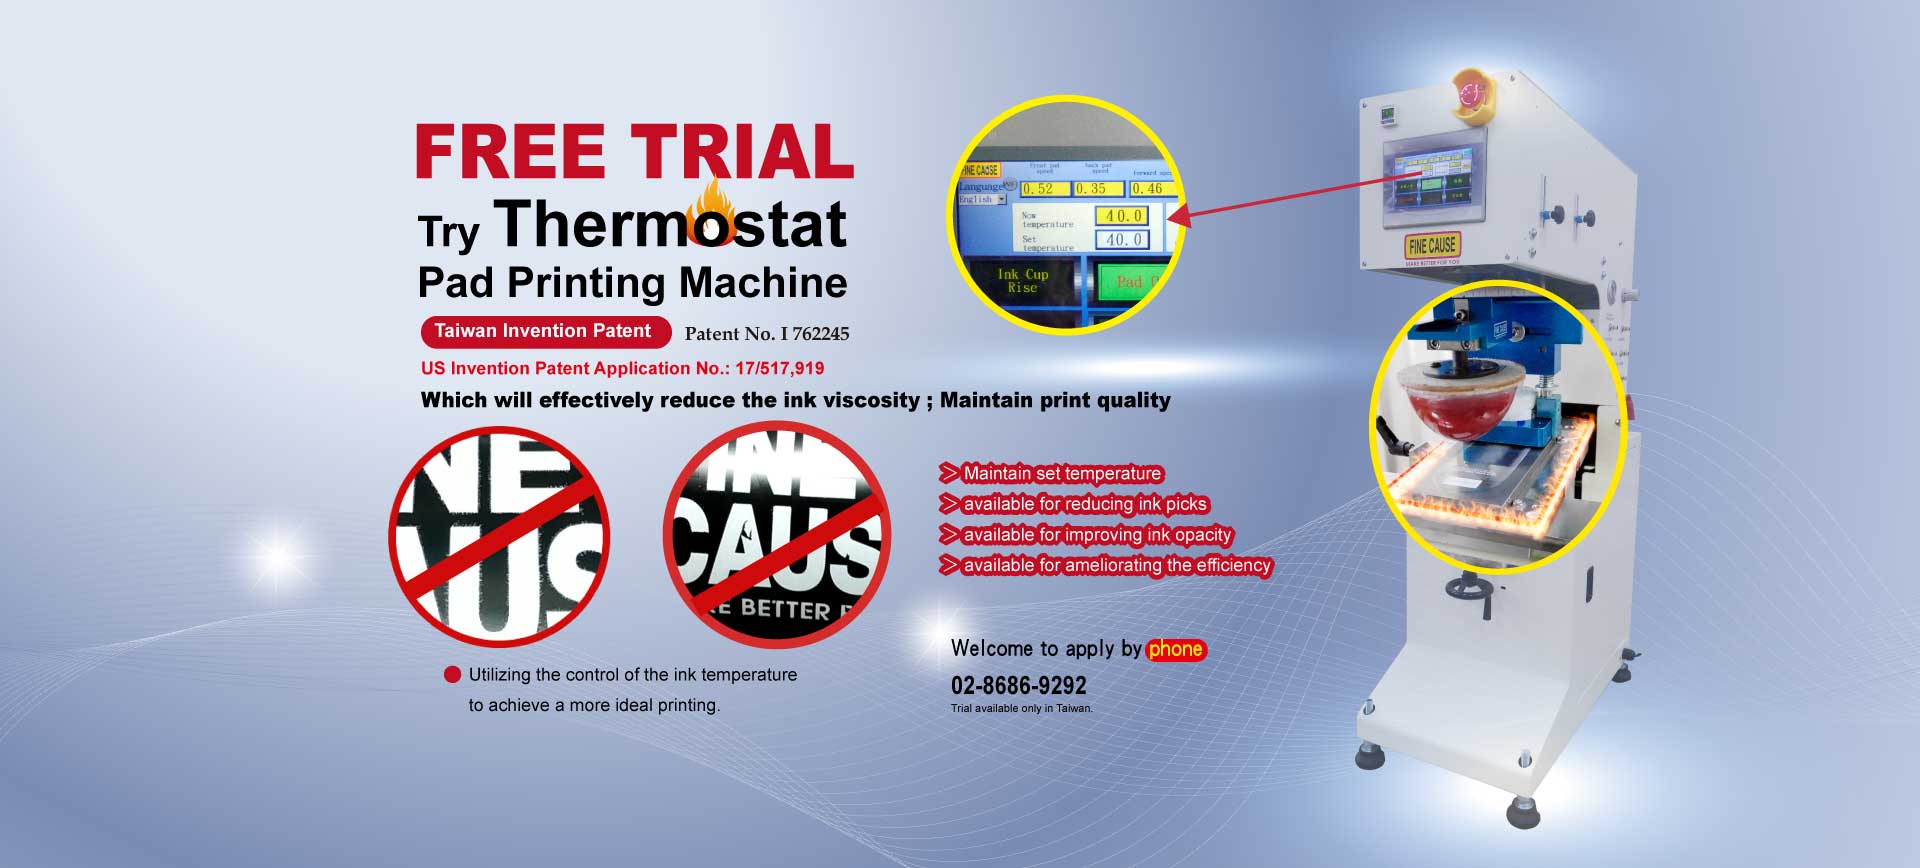 Pad Printing Machine by Temp-control